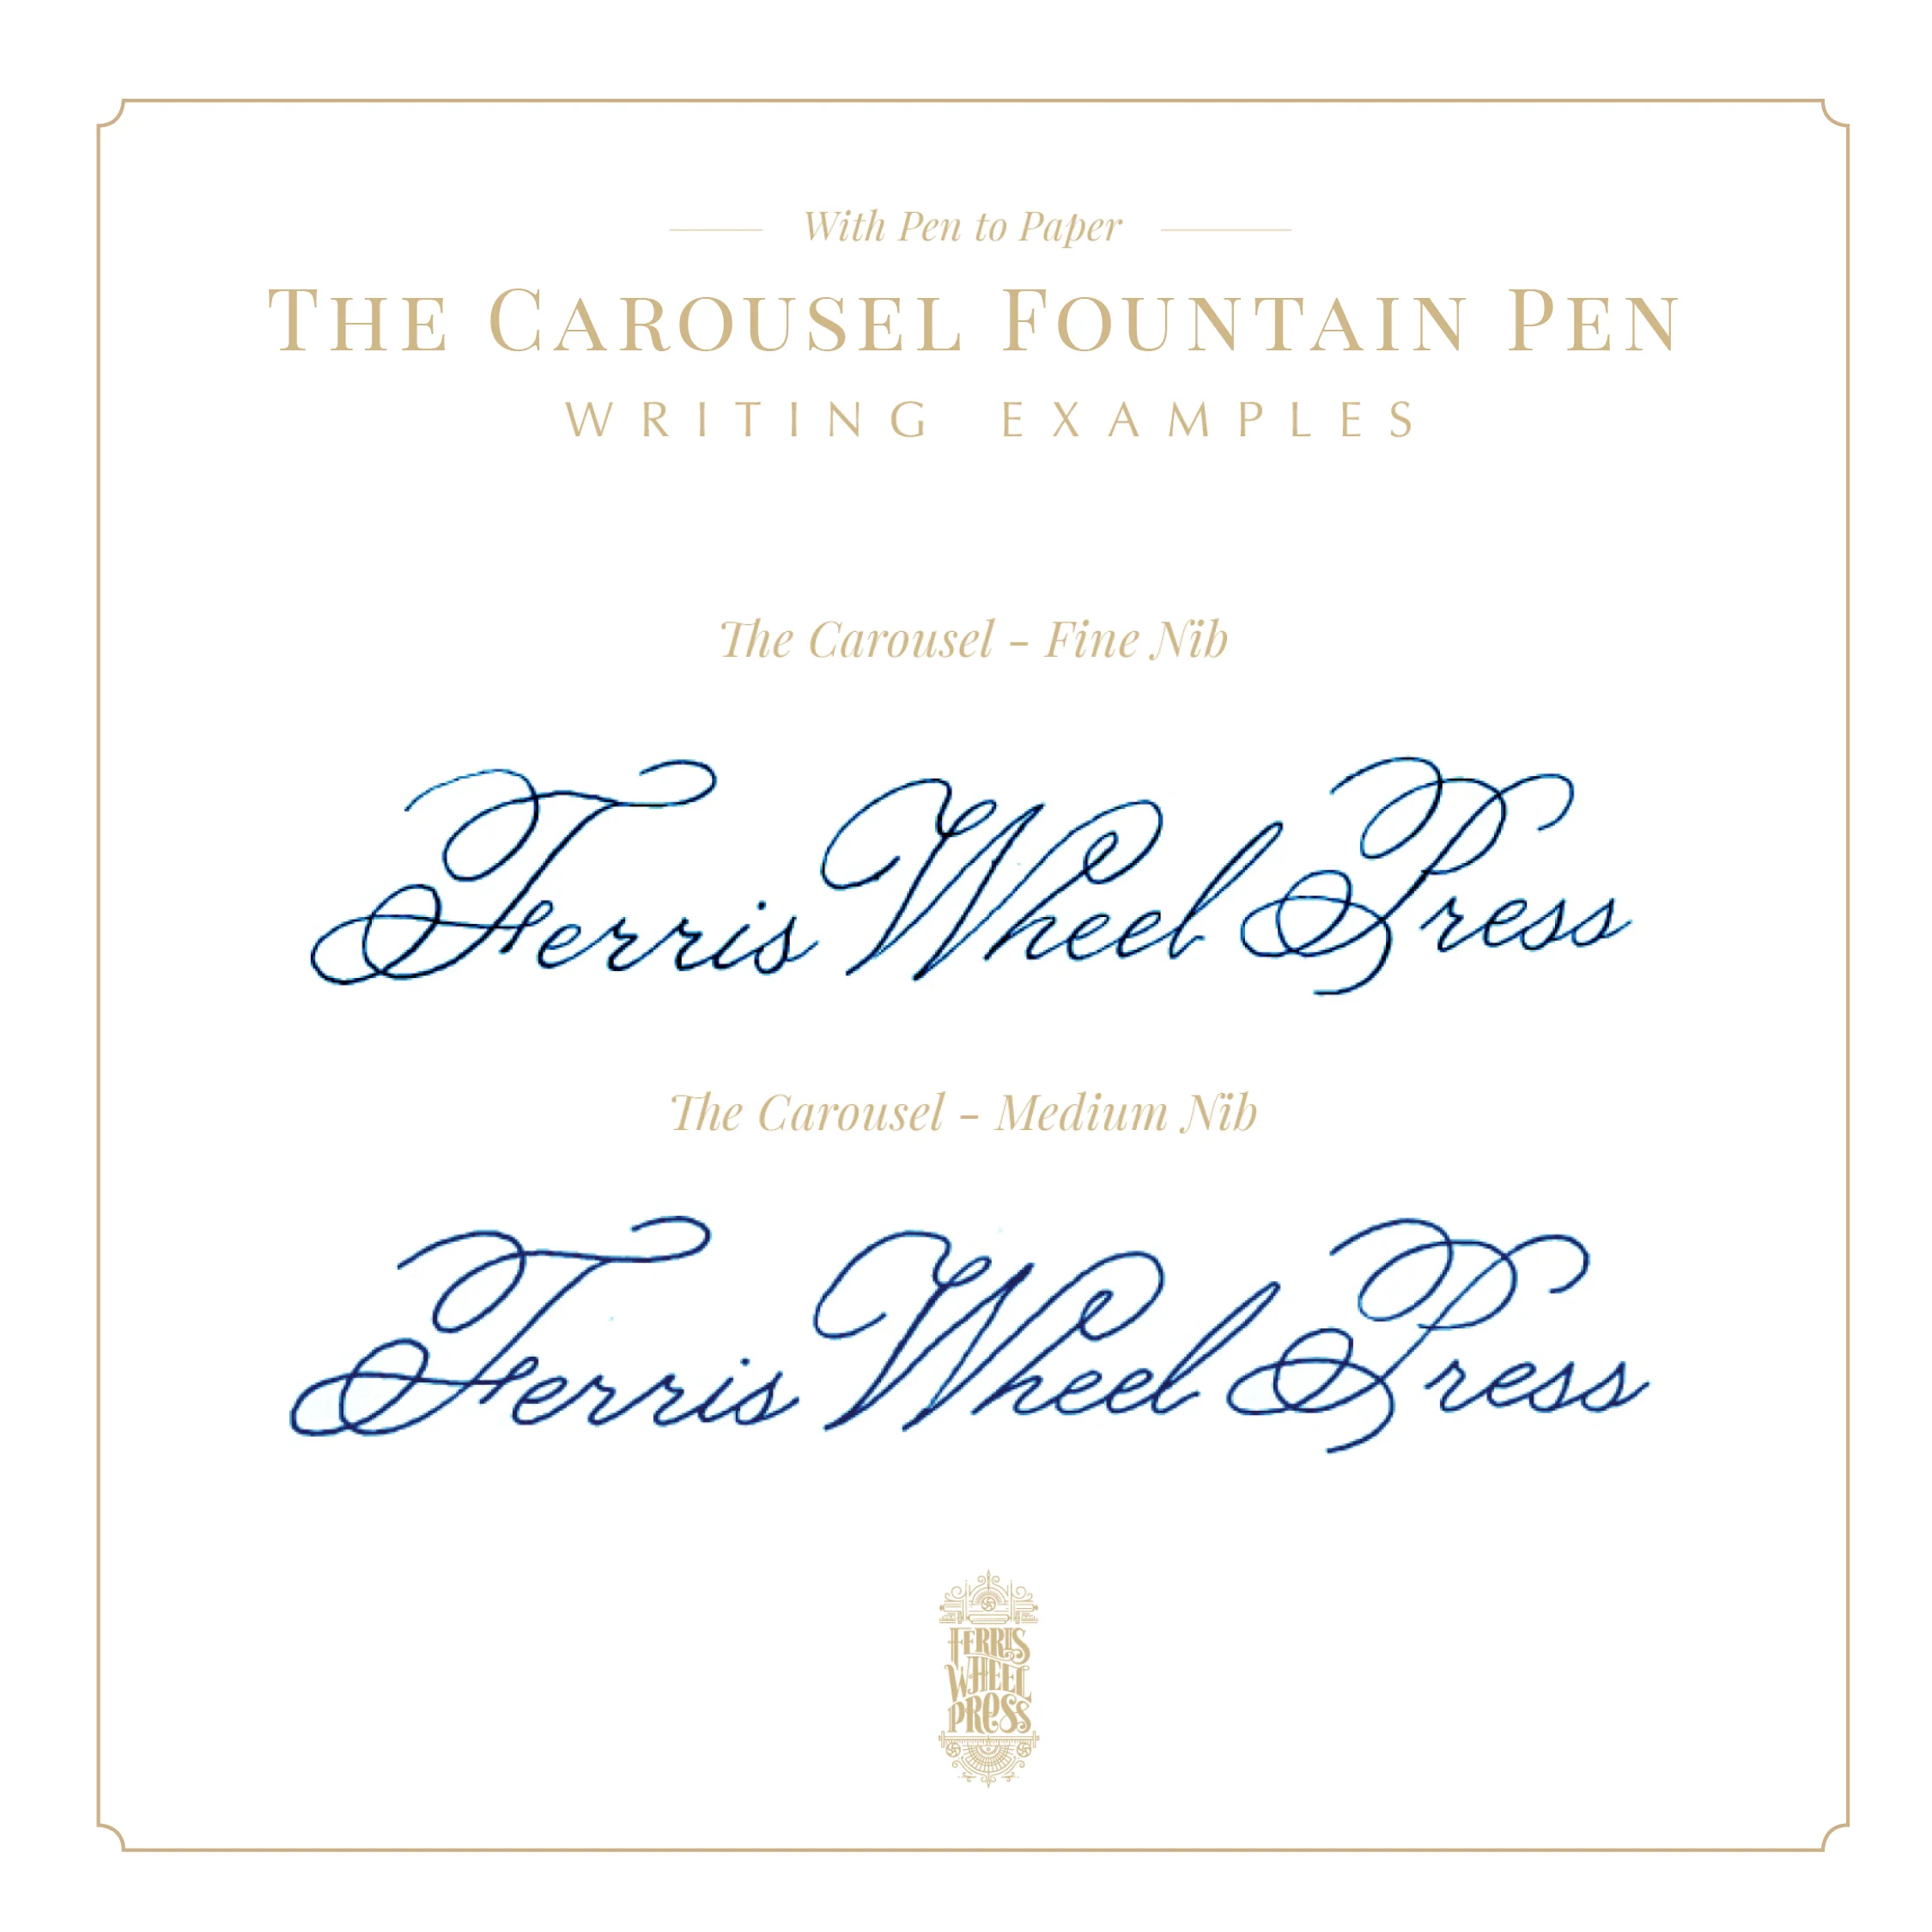 Ferris Wheel Press Limited Edition - The Carousel Fountain Pen - Poison Envy